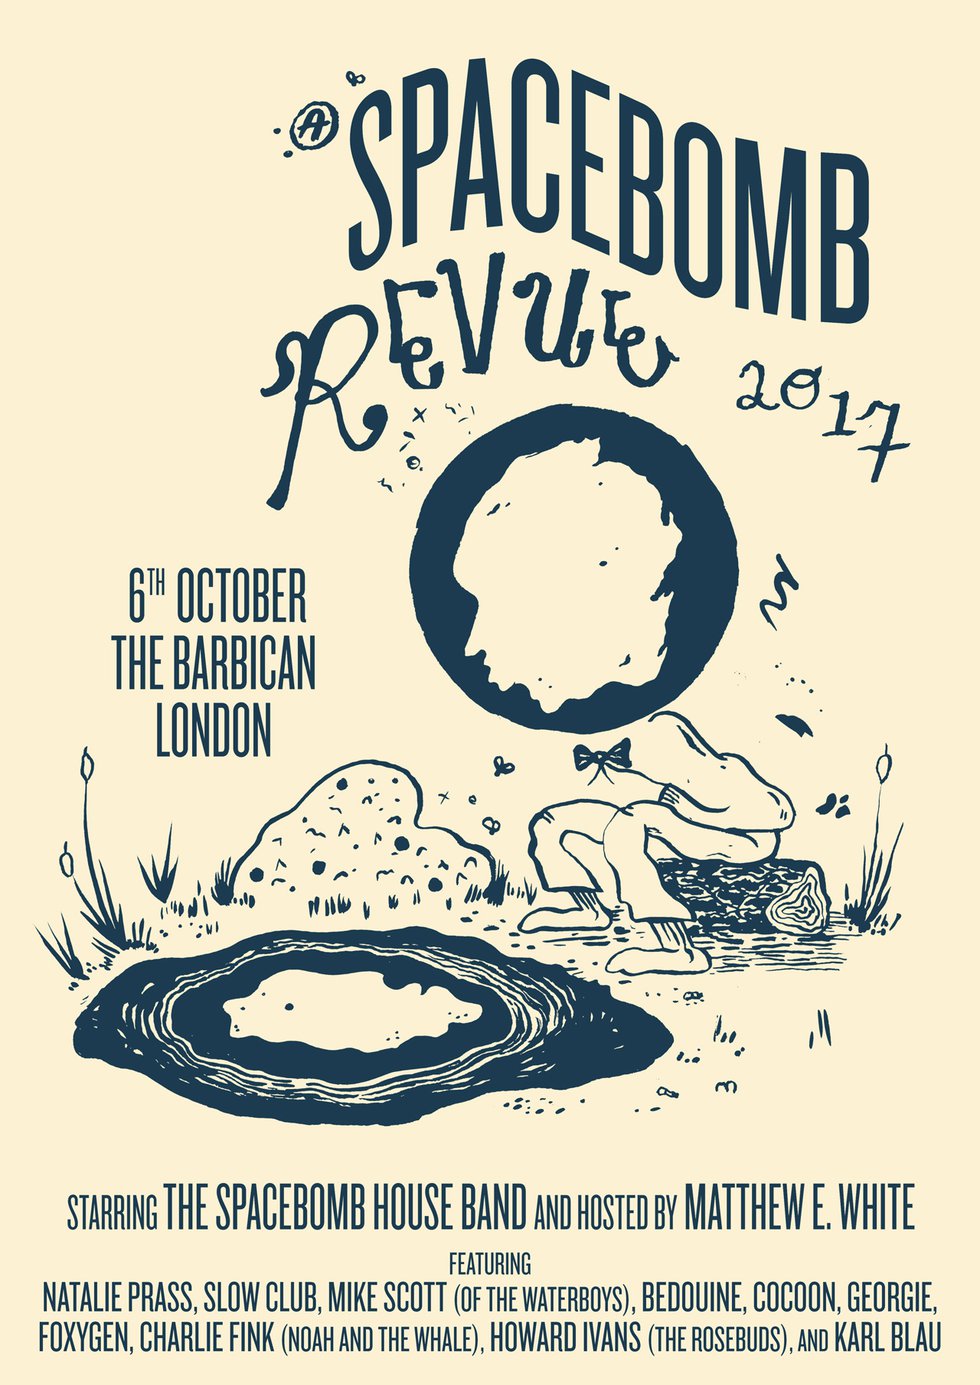 Spacebomb-Revue-poster.jpg